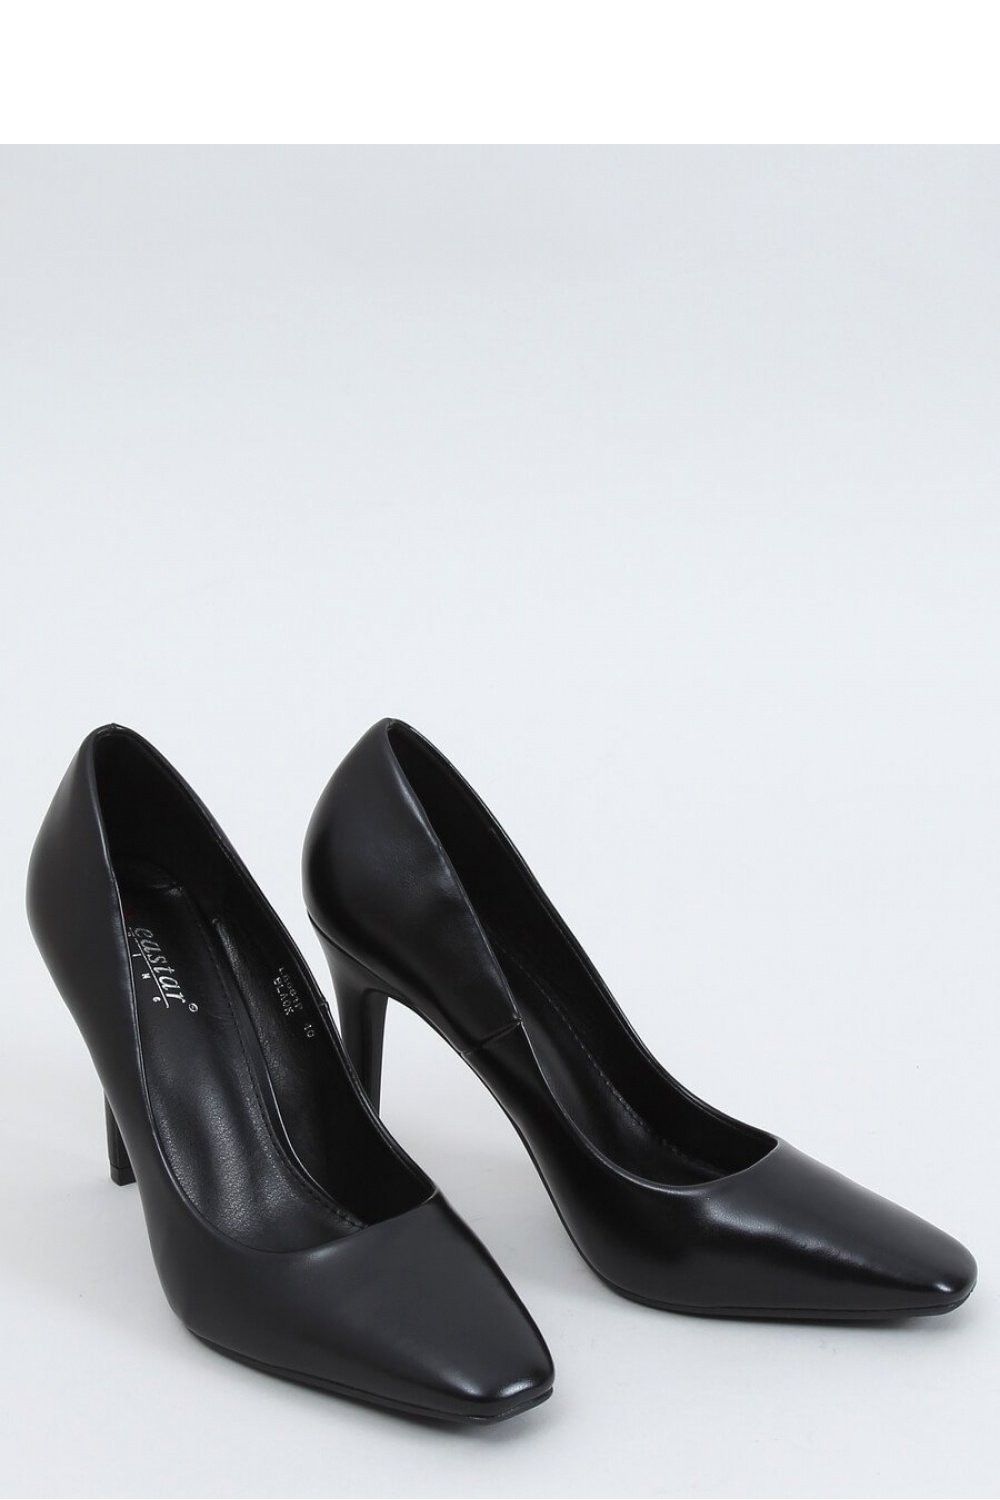 High heels model 153360 Inello Posh Styles Apparel